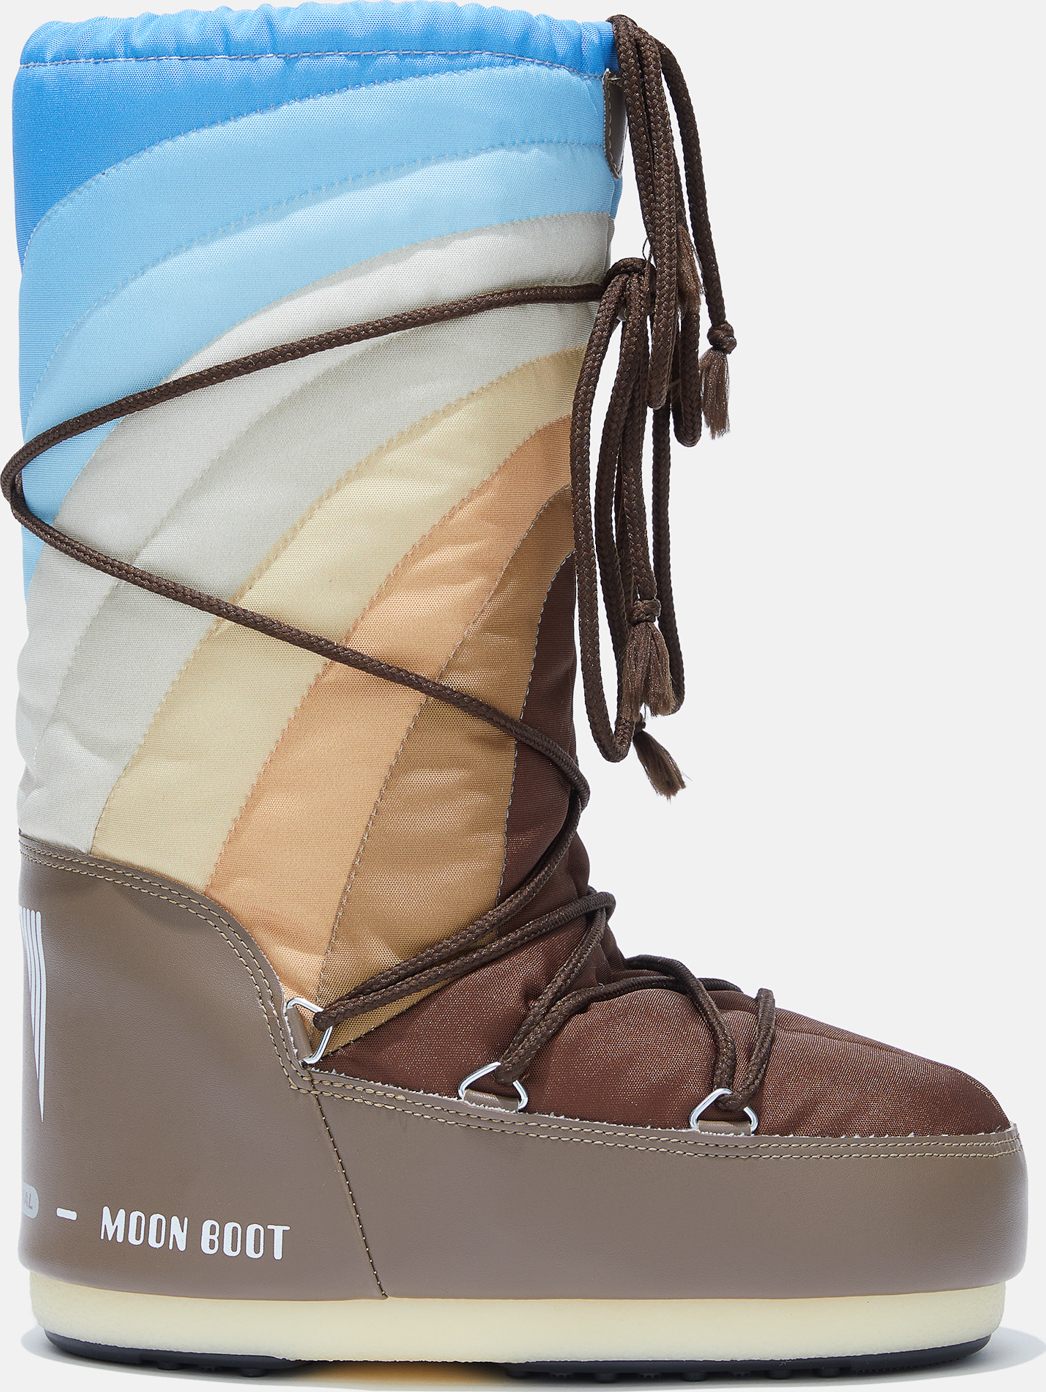 Zimní boty MOON BOOT Icon rainbow hnědé Velikost: EU 35/38